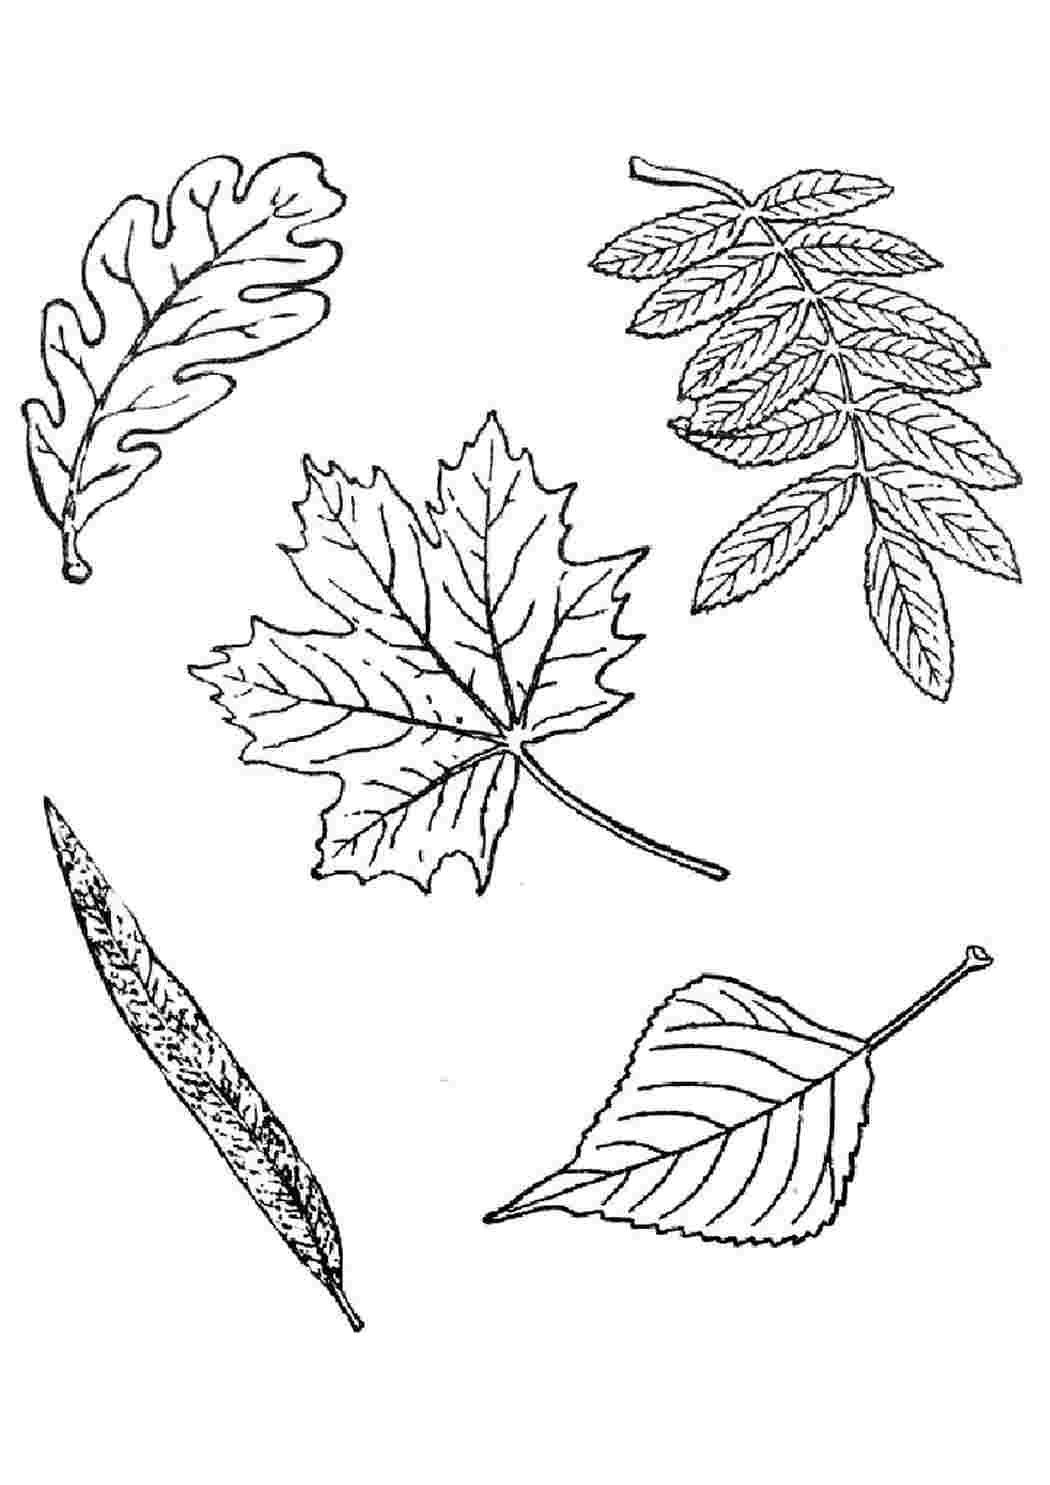 Чертеж листьев. Листья раскраска. Раскраска листьев деревьев. Листья разных деревьев. Листья рисунок.